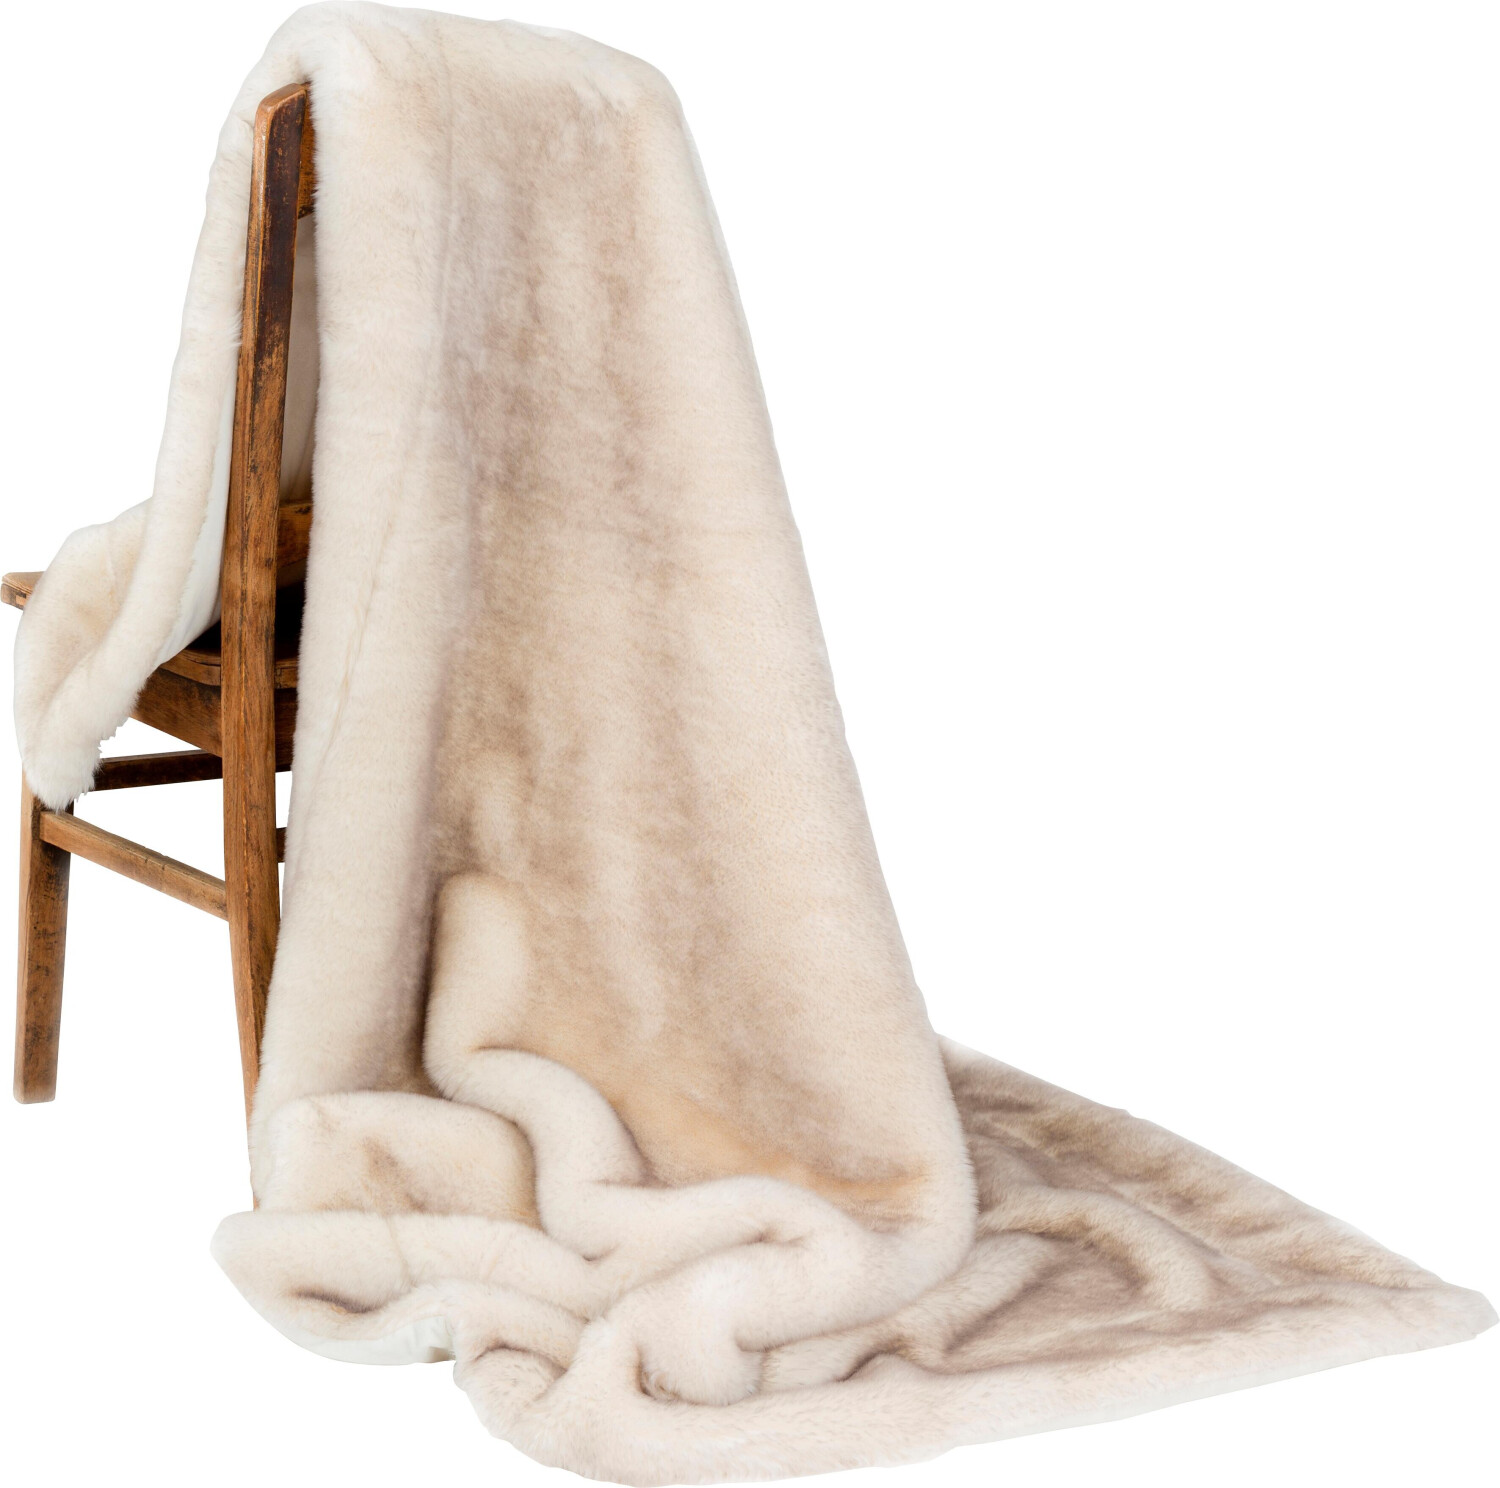 Star Home Textil Polarfuchs 150x200cm Preisvergleich 194,65 € ab Wohndecke bei | weiß